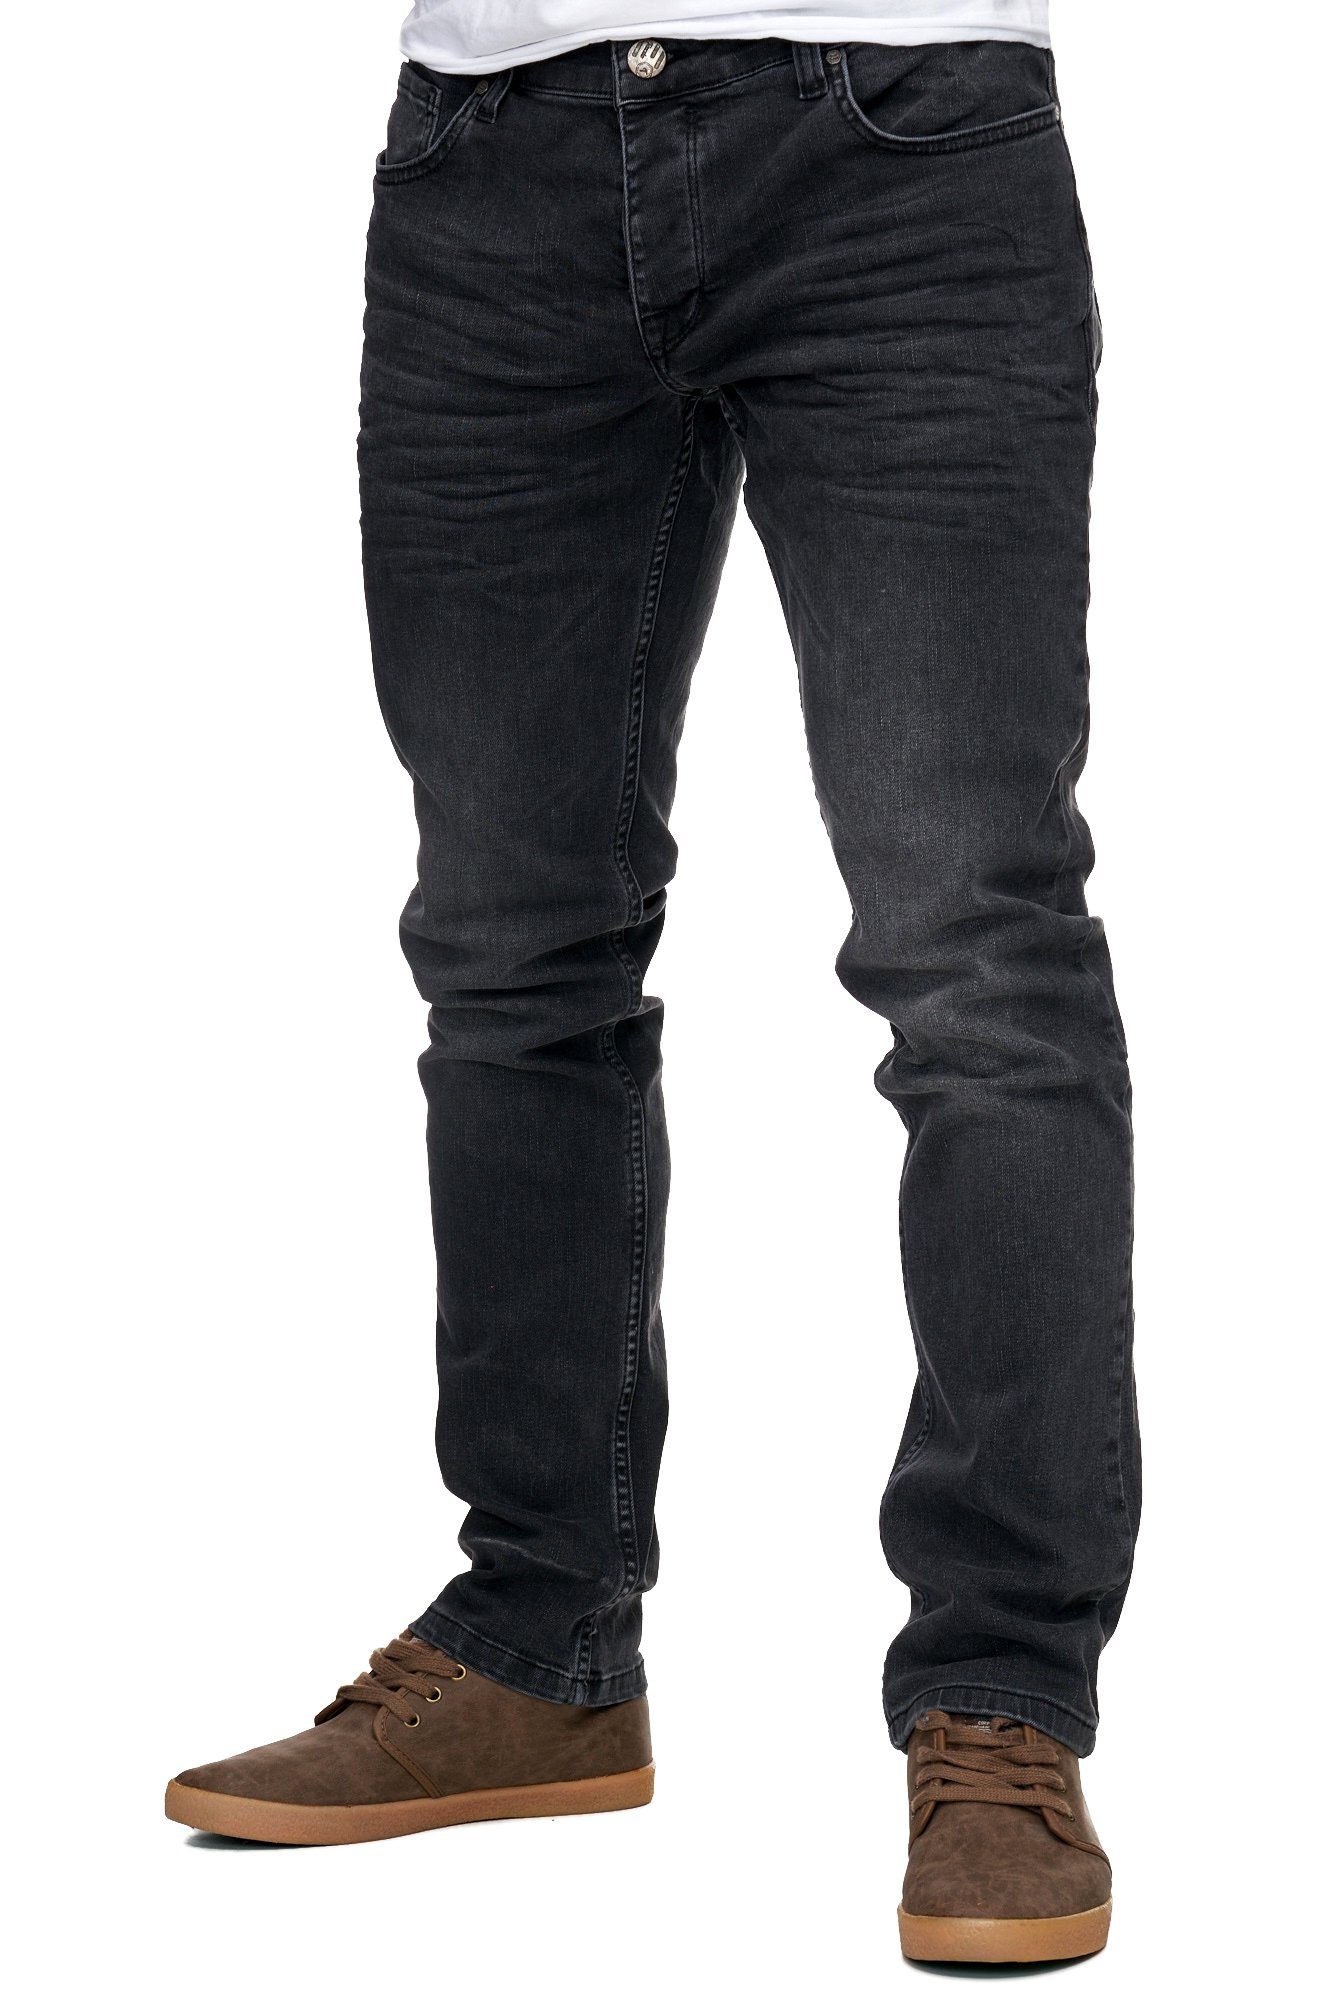 Reslad Stretch-Jeans Reslad Jeans-Herren Slim Fit Basic Style Stretch-Denim Jeans-Hose Stretch Jeans-Hose Slim Fit schwarz